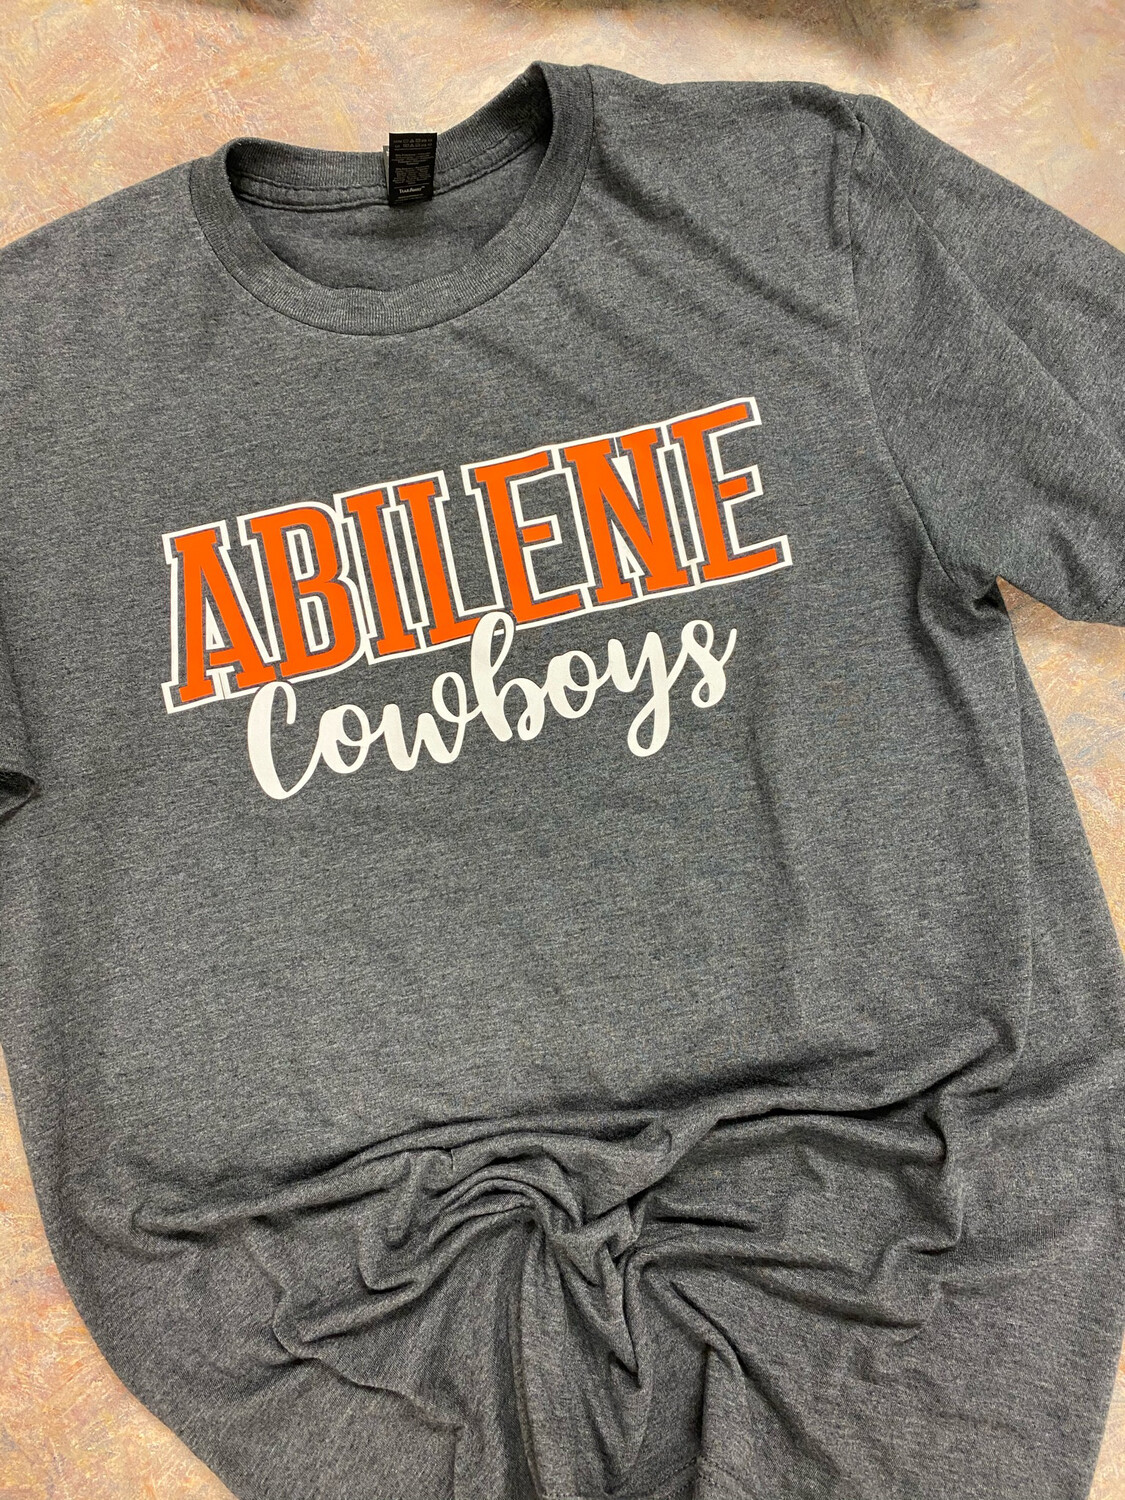 Abilene Cowboys Dark Grey Tshirt (V)